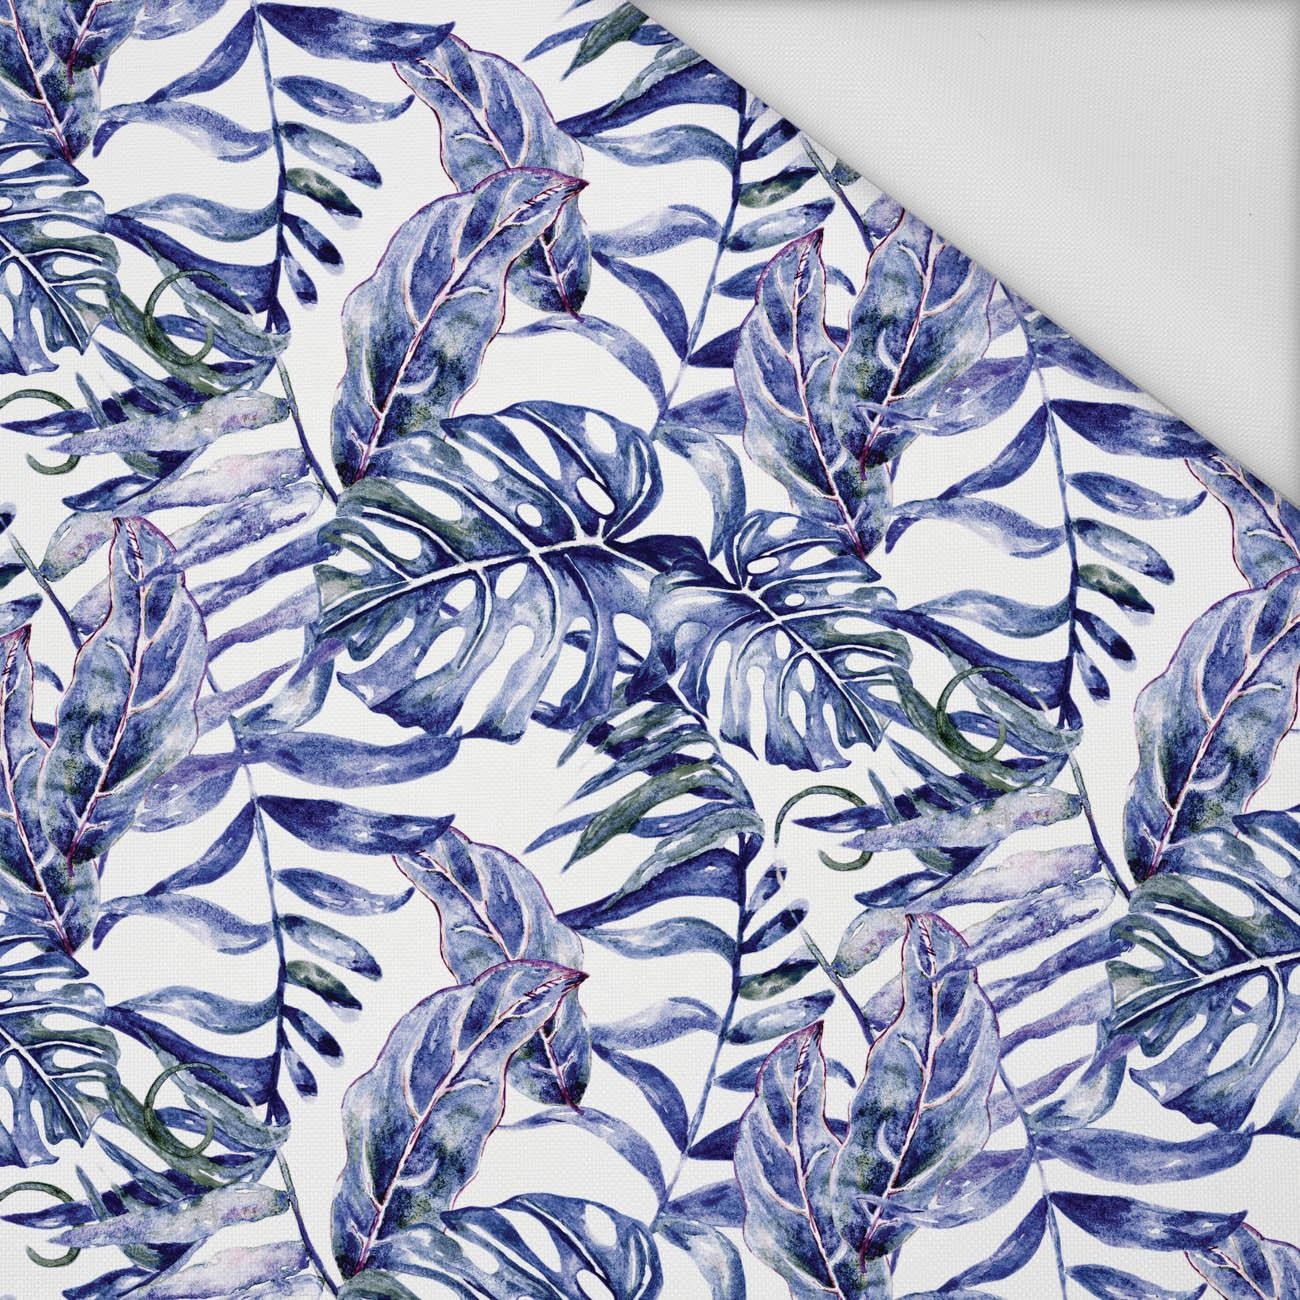 MINI LEAVES PAT. 3 (TROPICAL NATURE) (Very Peri) - Waterproof woven fabric